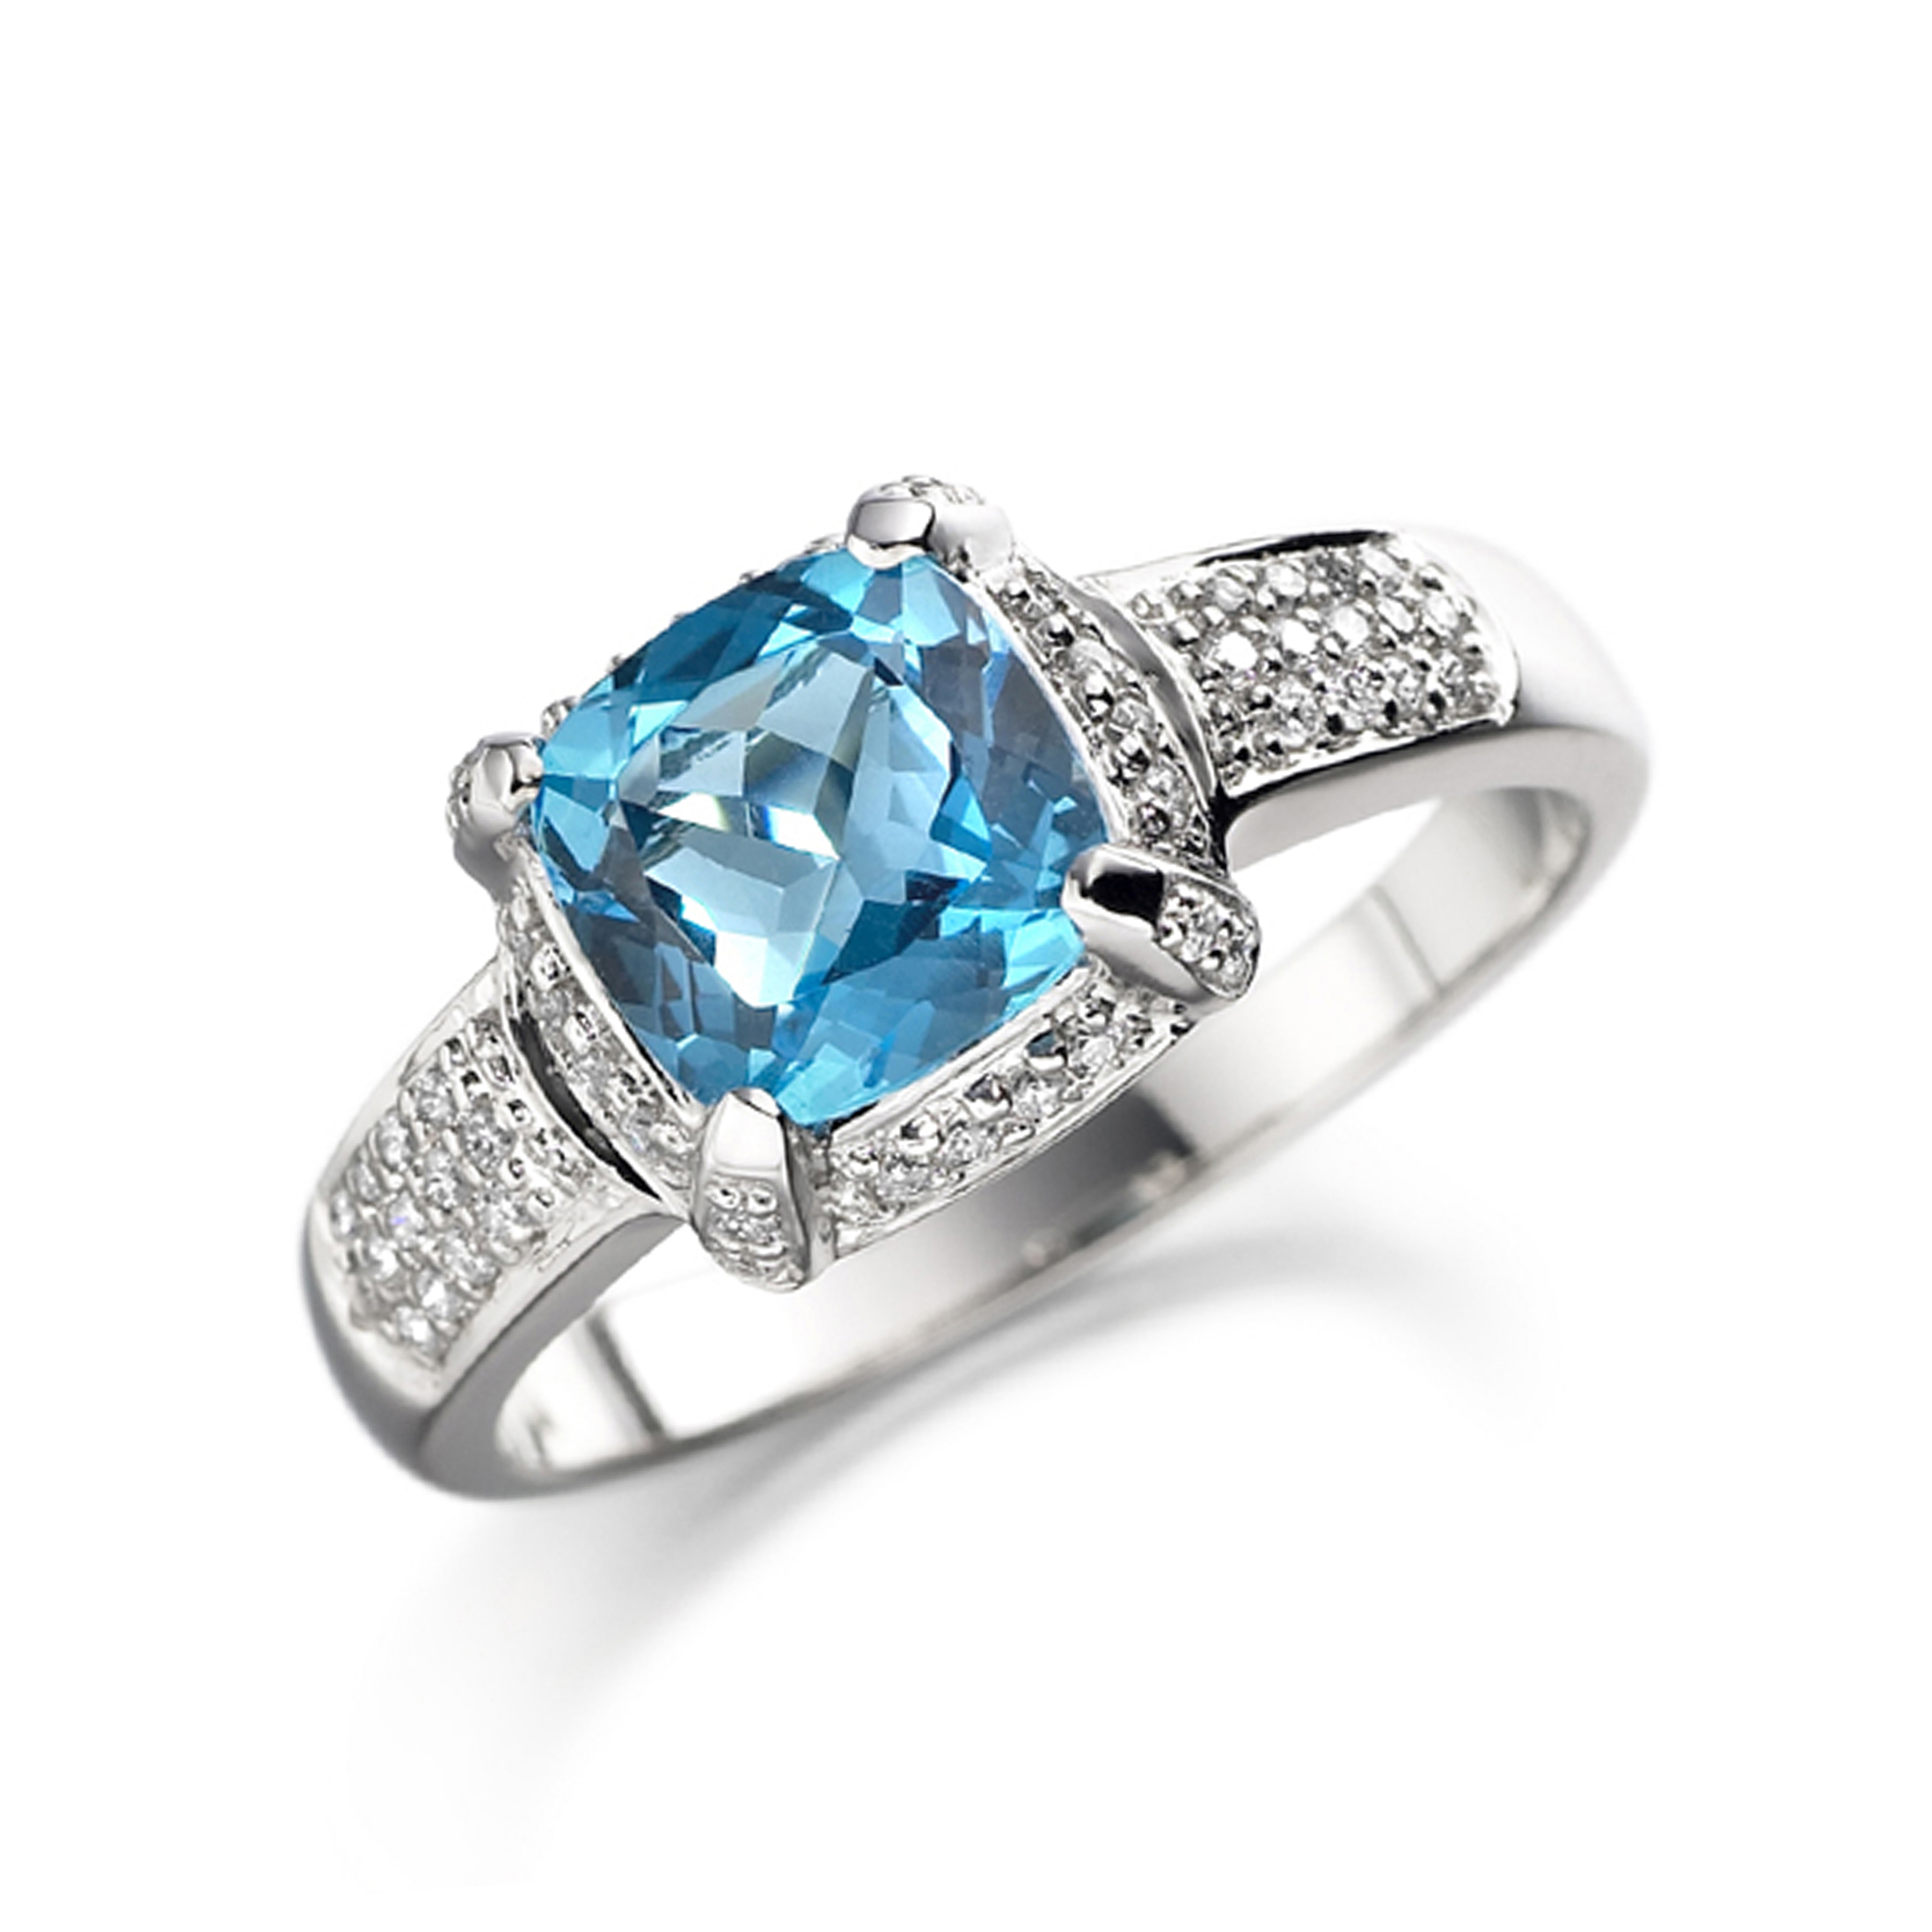 5mm Cushion Sqare Blue Topaz Stones On Shoulder Diamond And Gemstone Engagement Ring